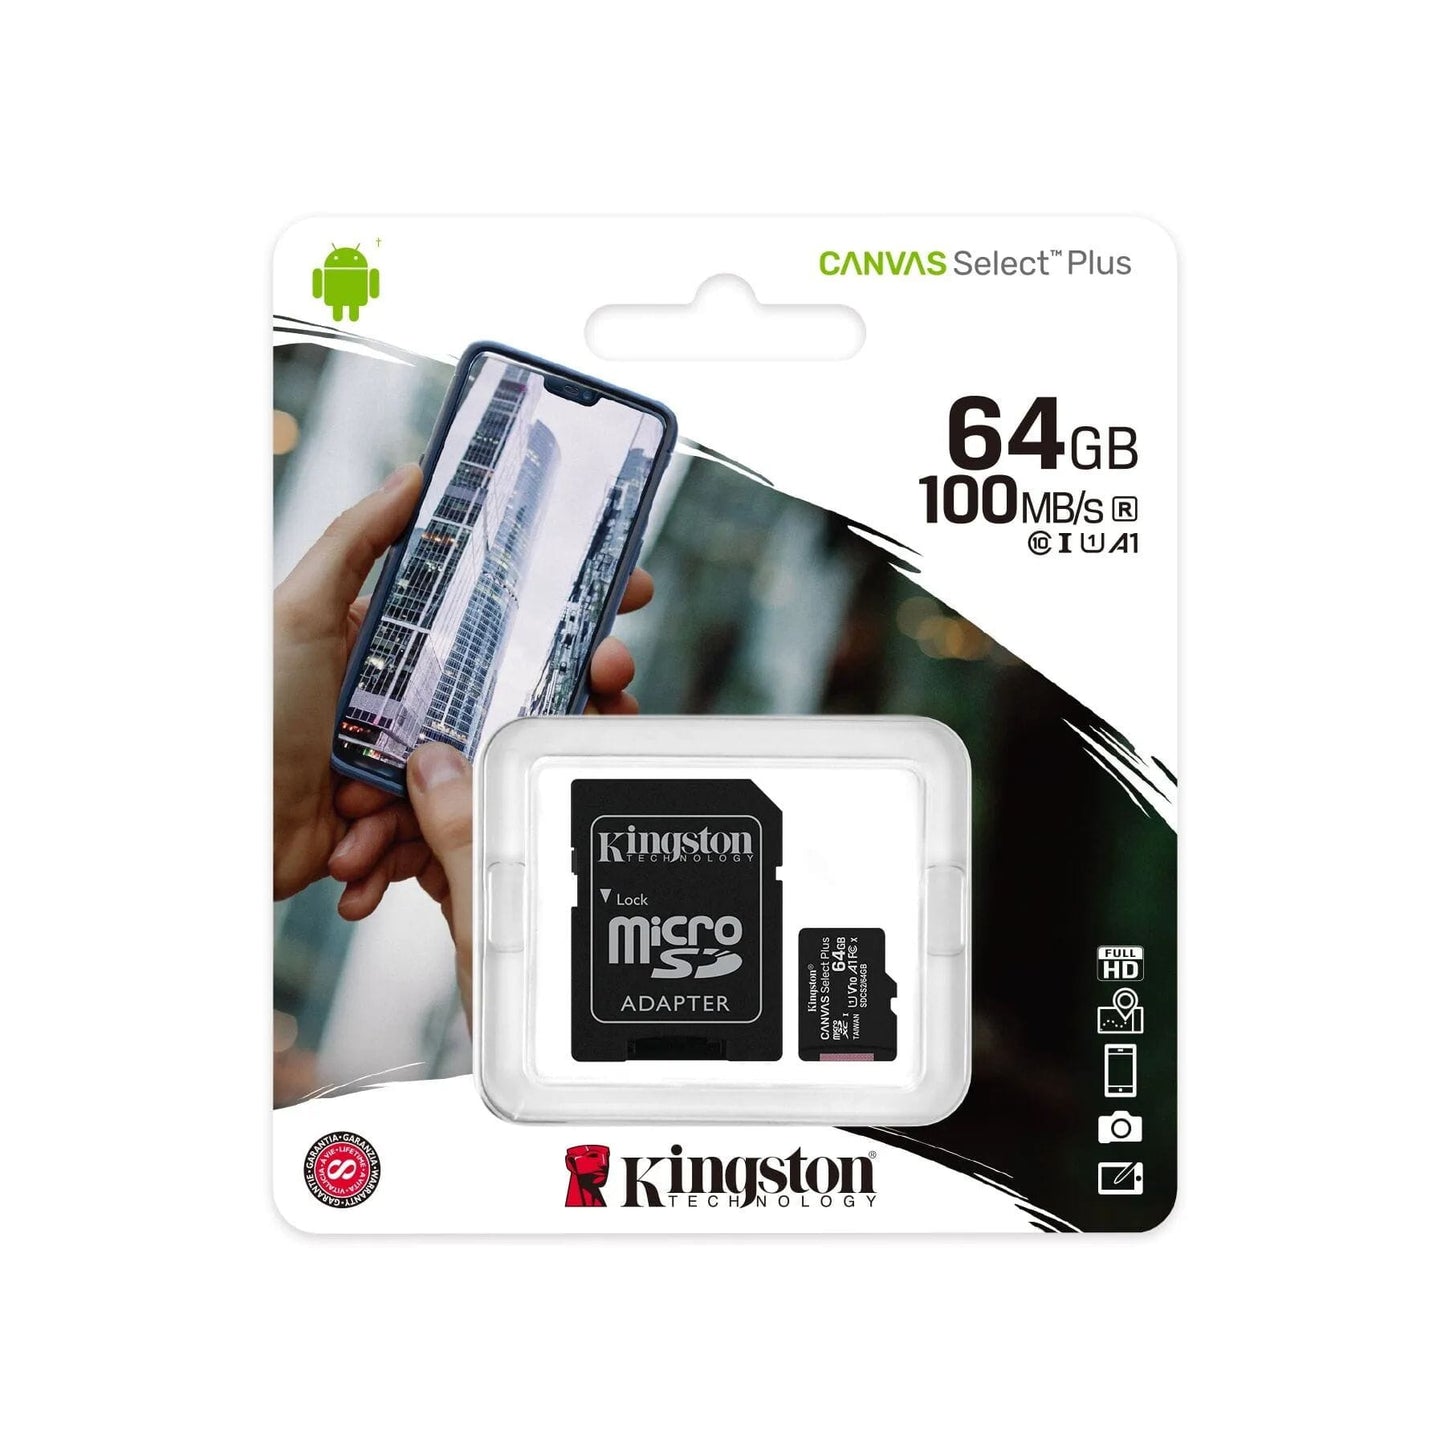 KINGSTON CANVAS SELECT PLUS MICROSD CARD - 64GB